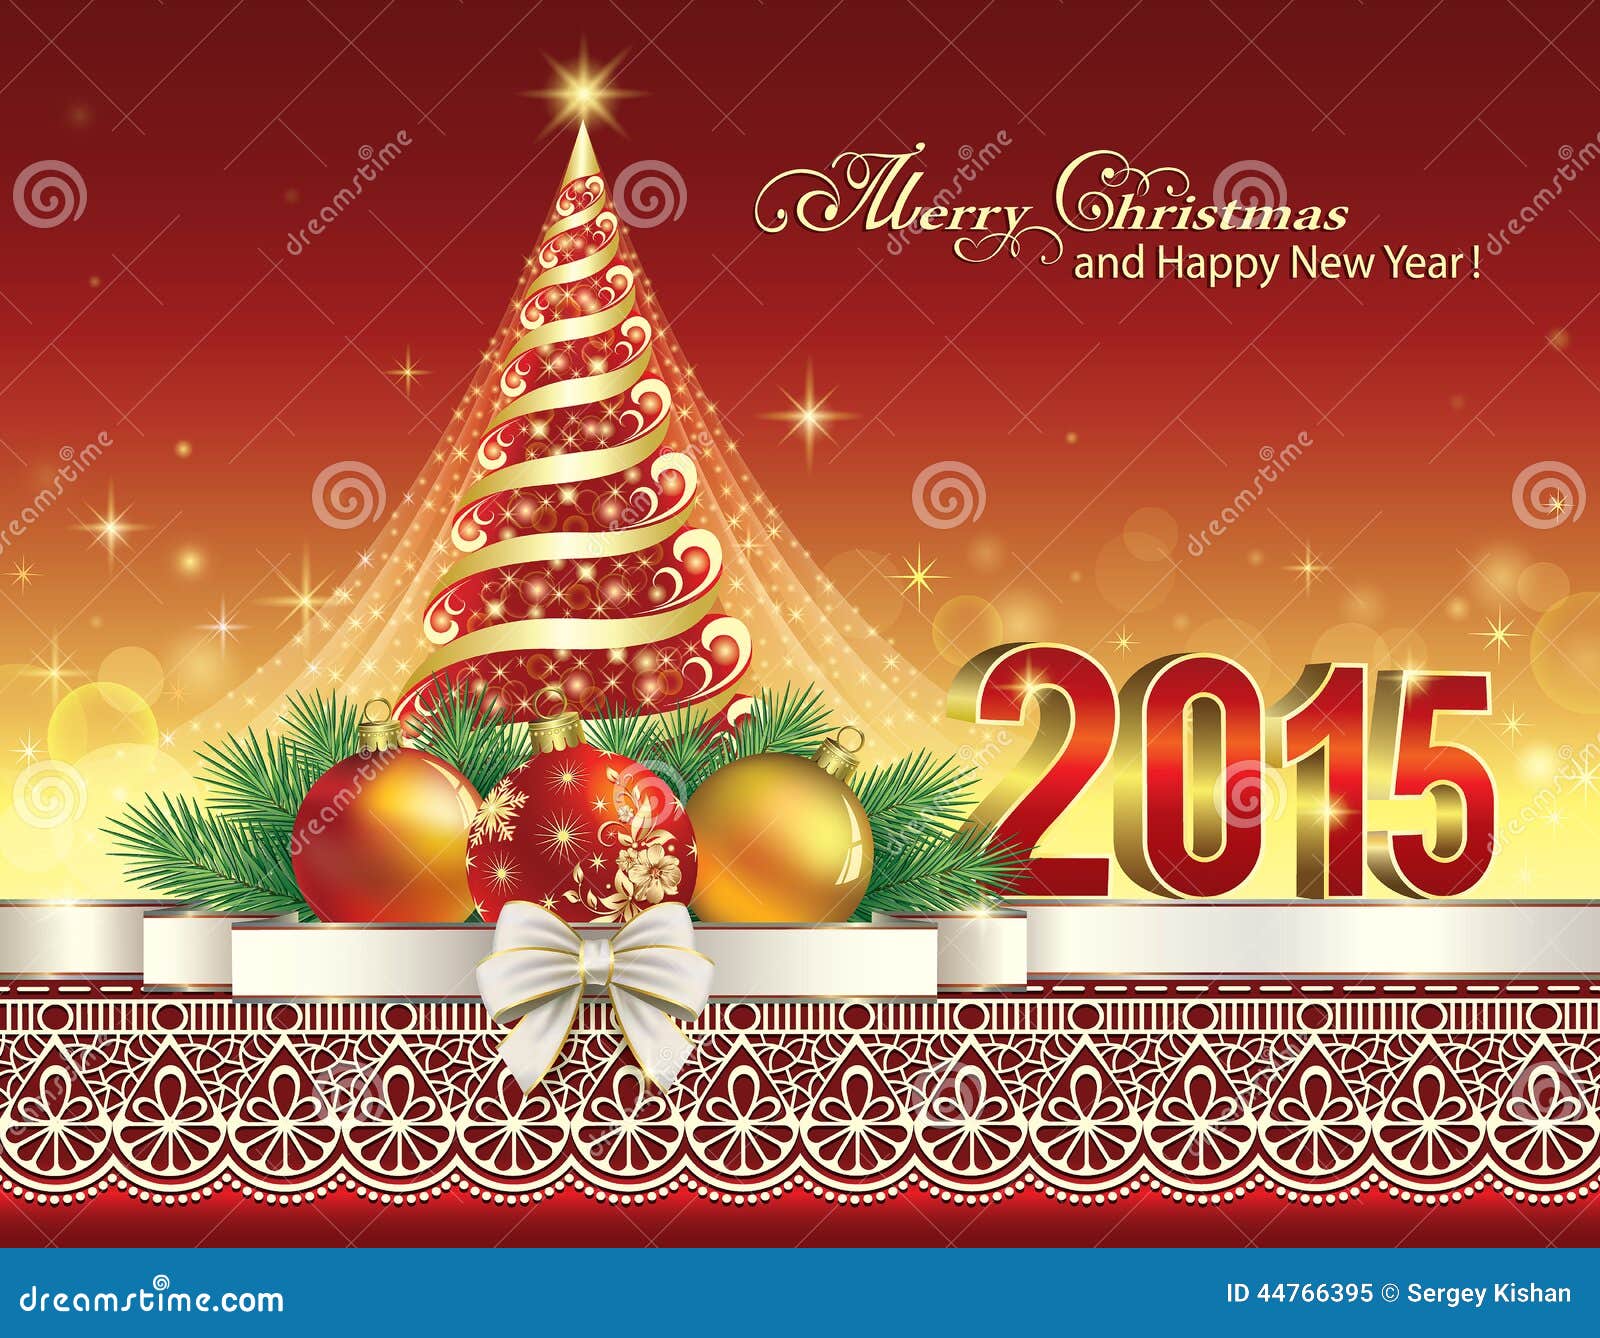 Christmas Card With 2015 And Festive Christmas Tree Stock 